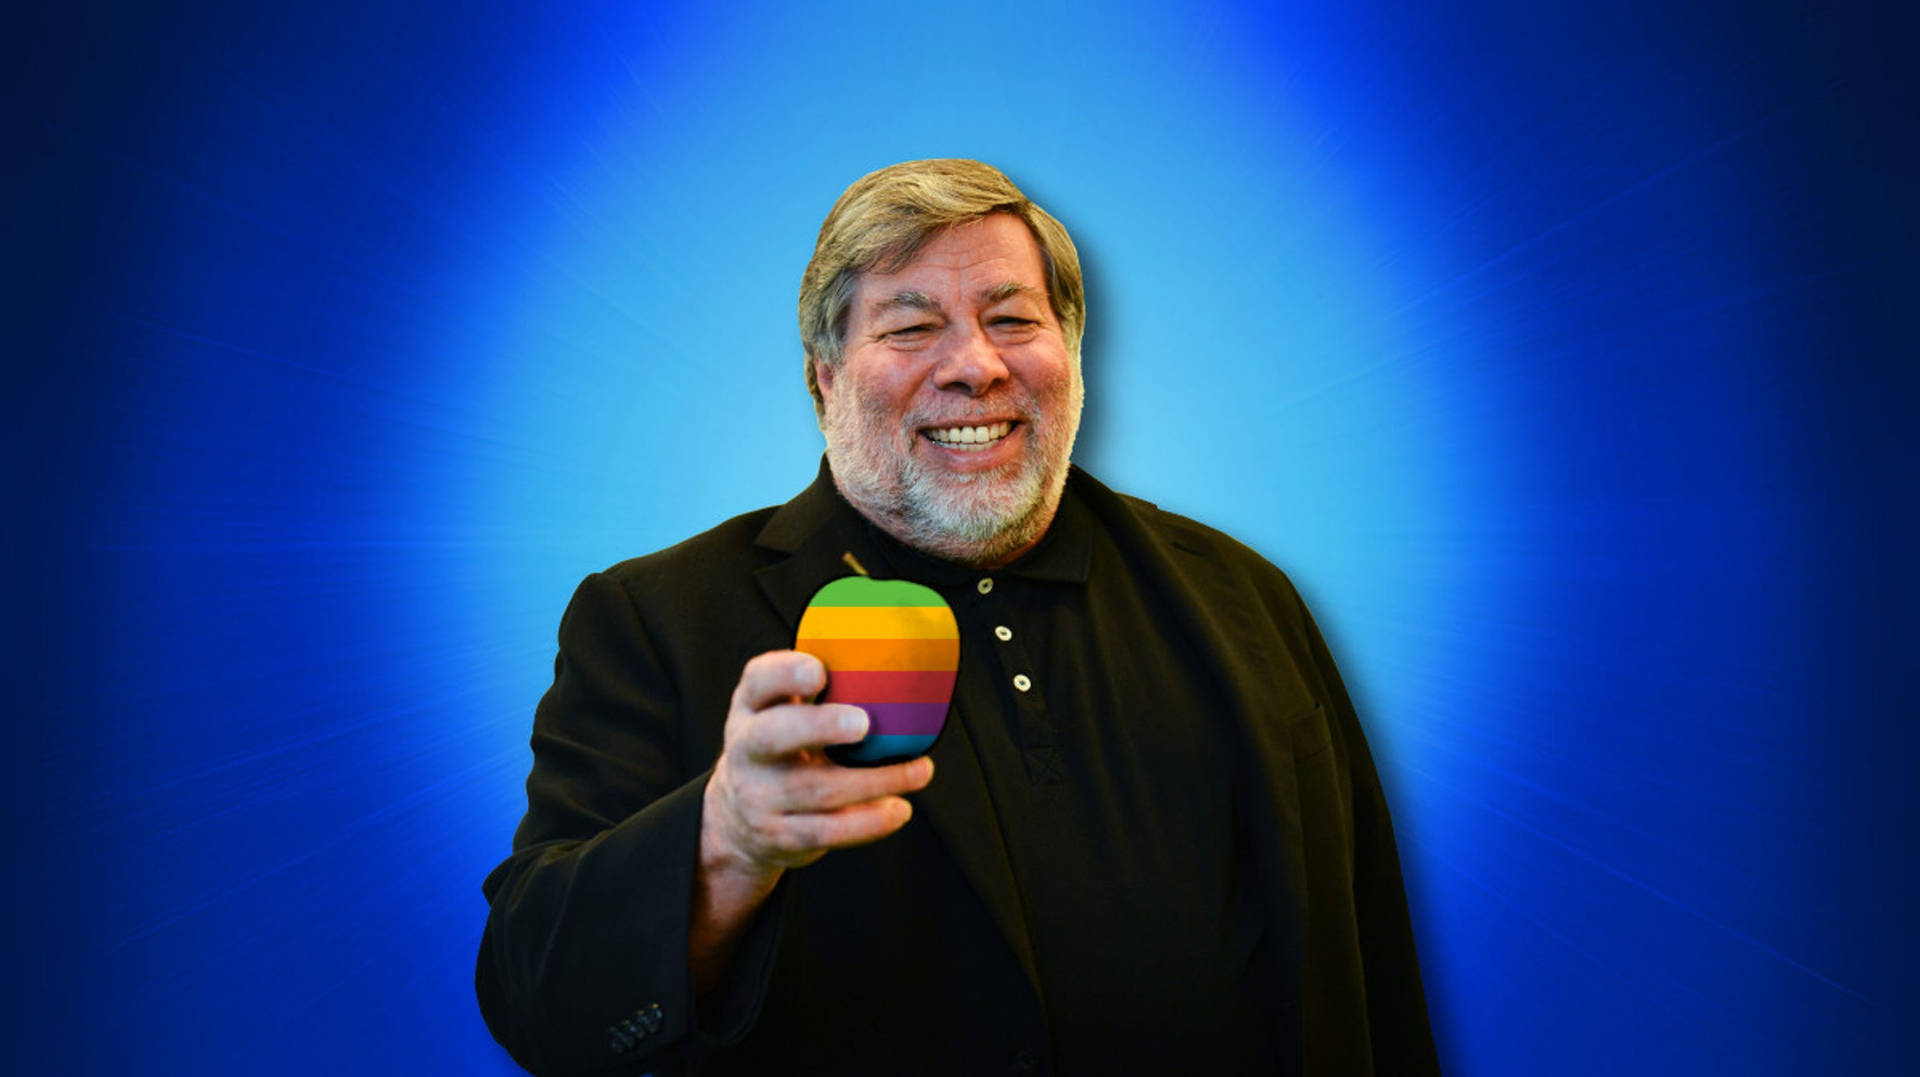 Steve Wozniak Wallpaper